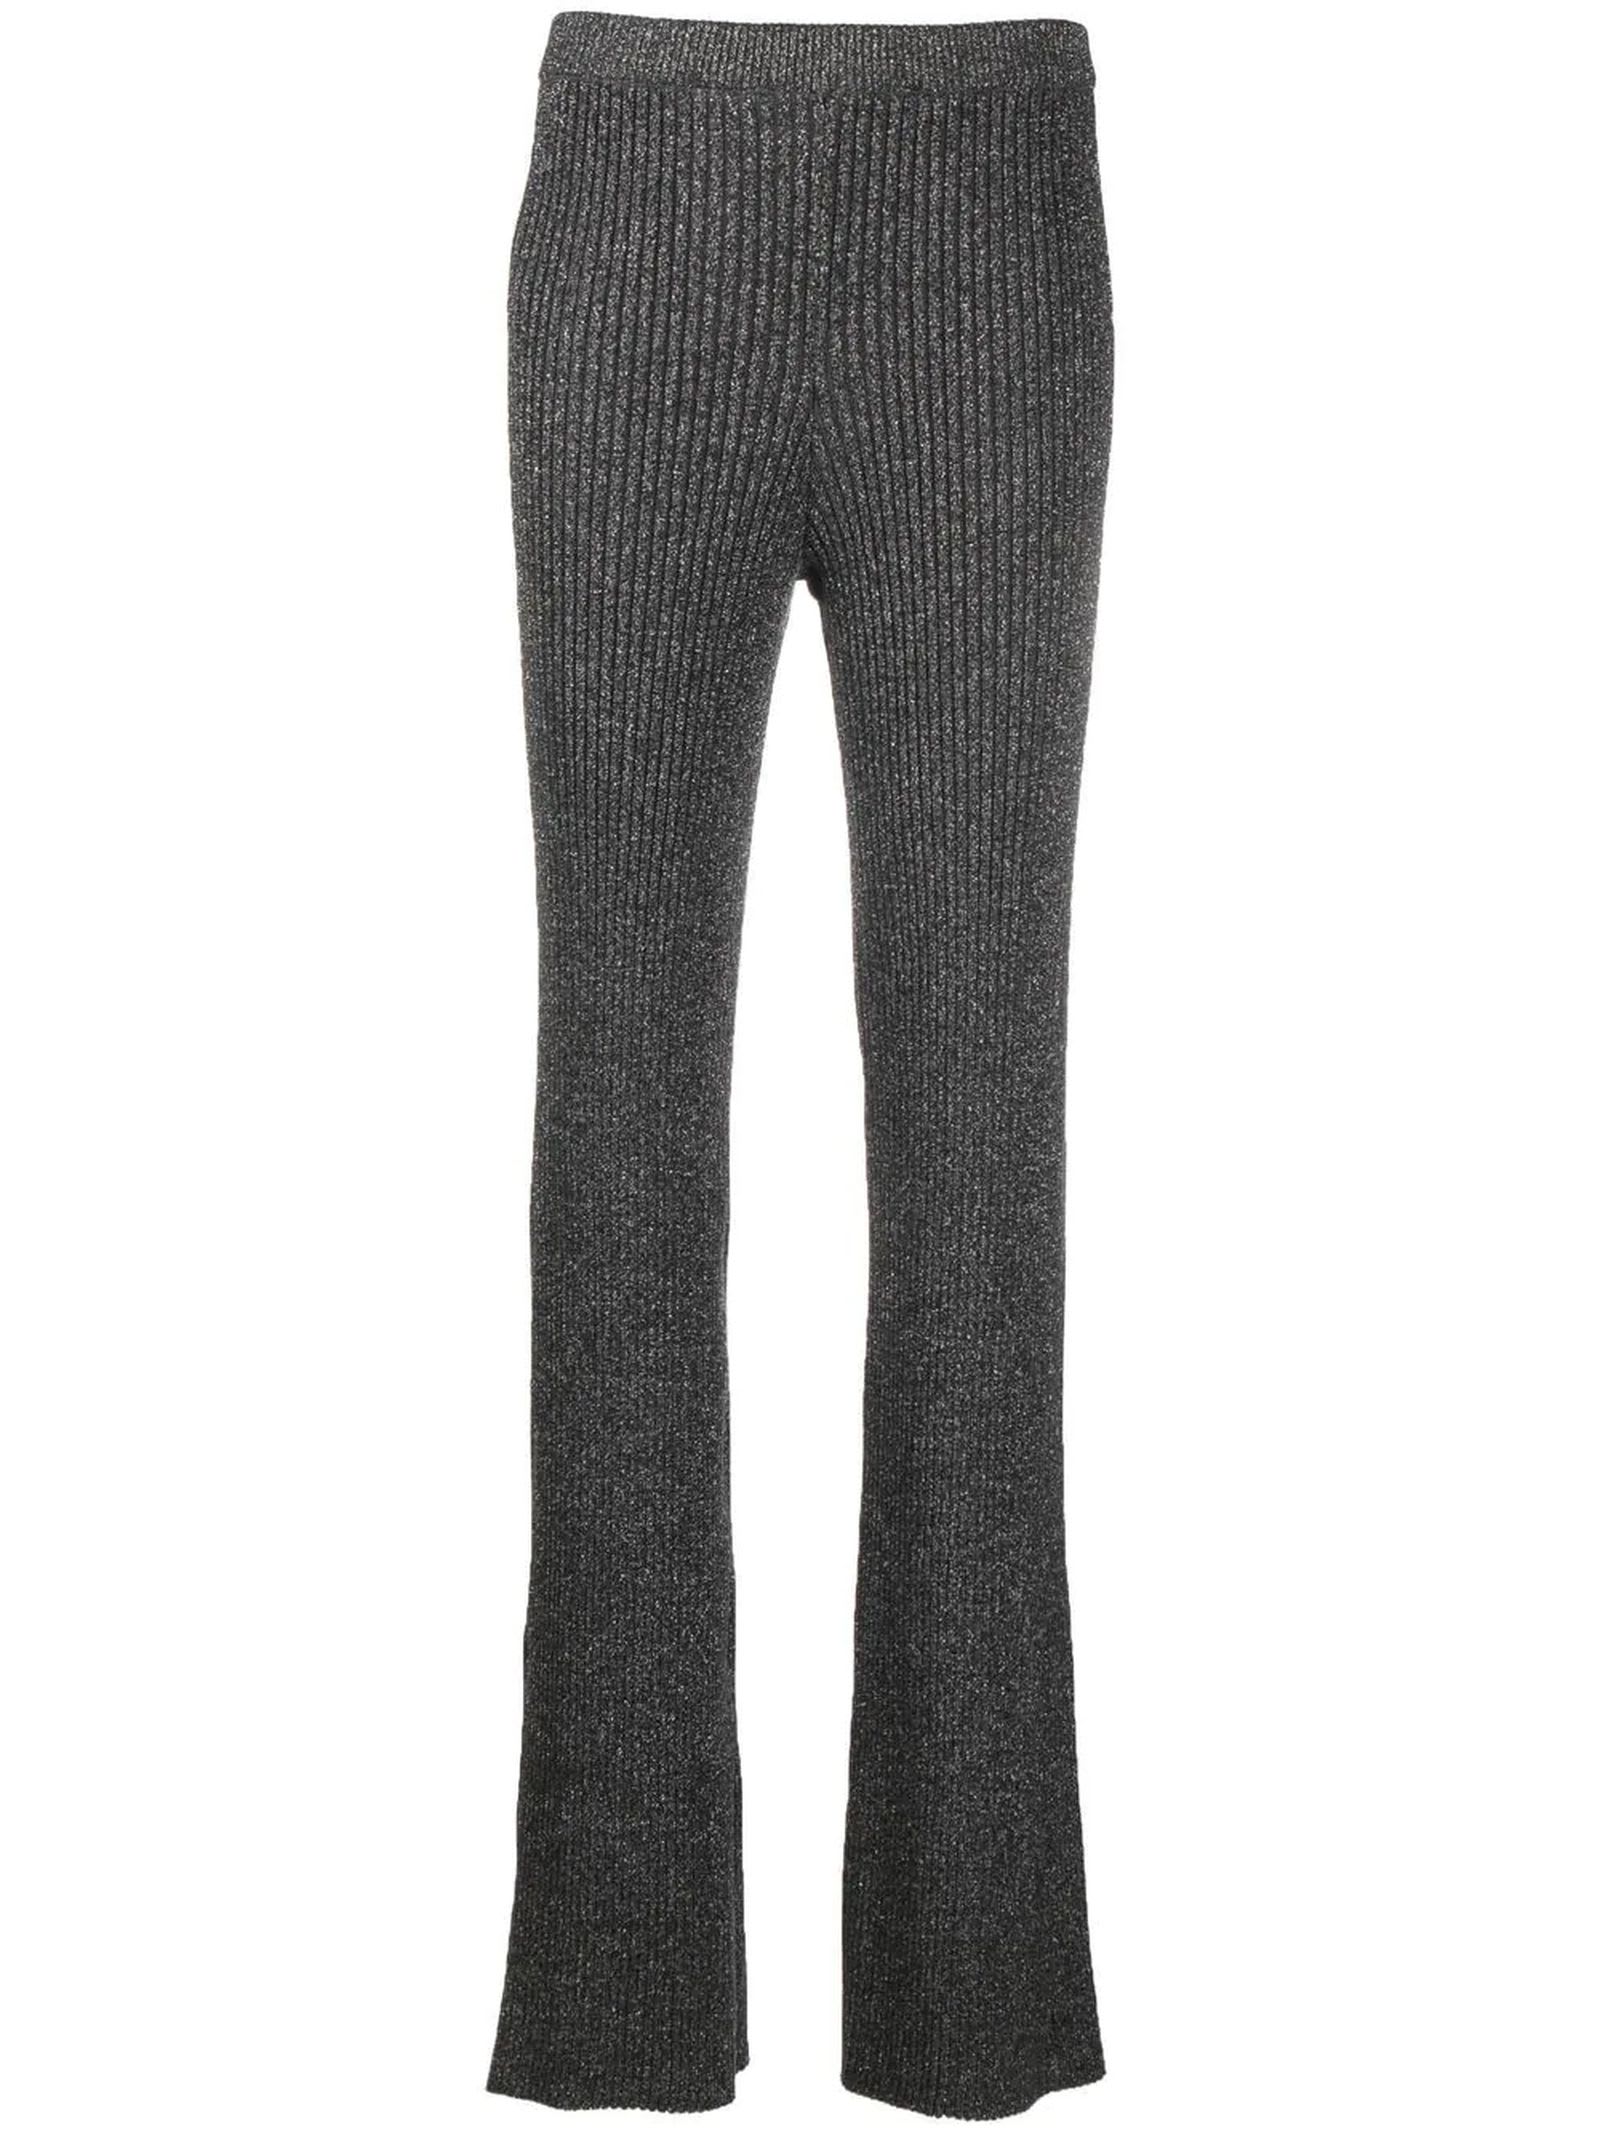 Alberta Ferretti Charcoal Grey Virgin Wool Blend Trousers